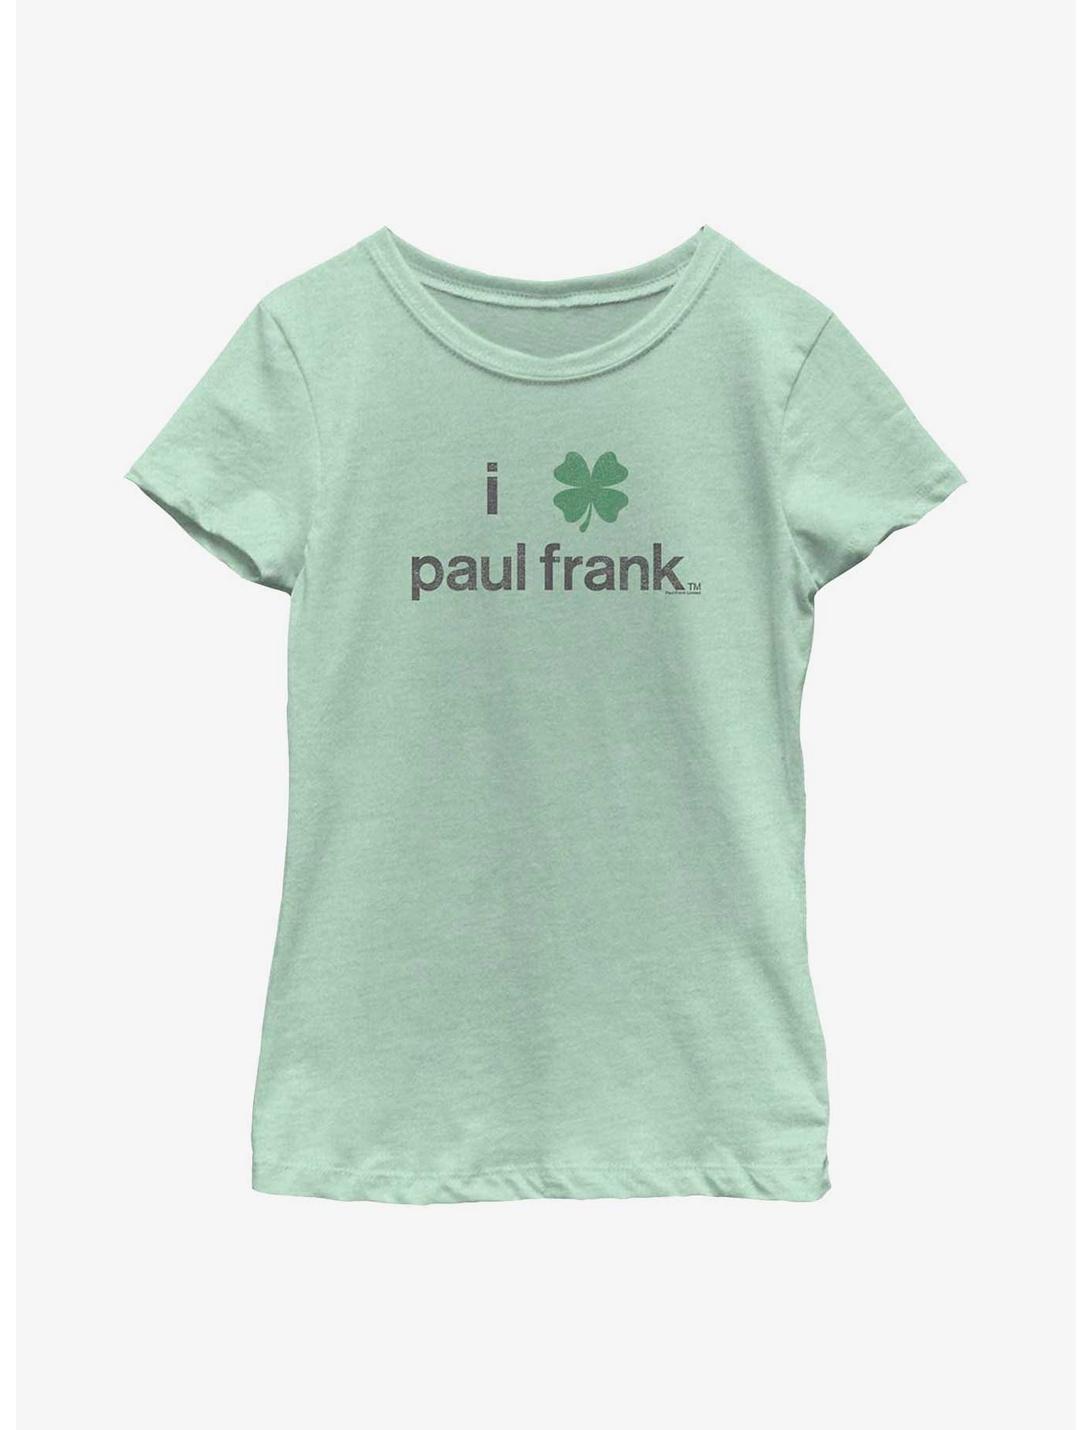 Paul Frank Shamrock Paul Frank Youth Girls T-Shirt, MINT, hi-res